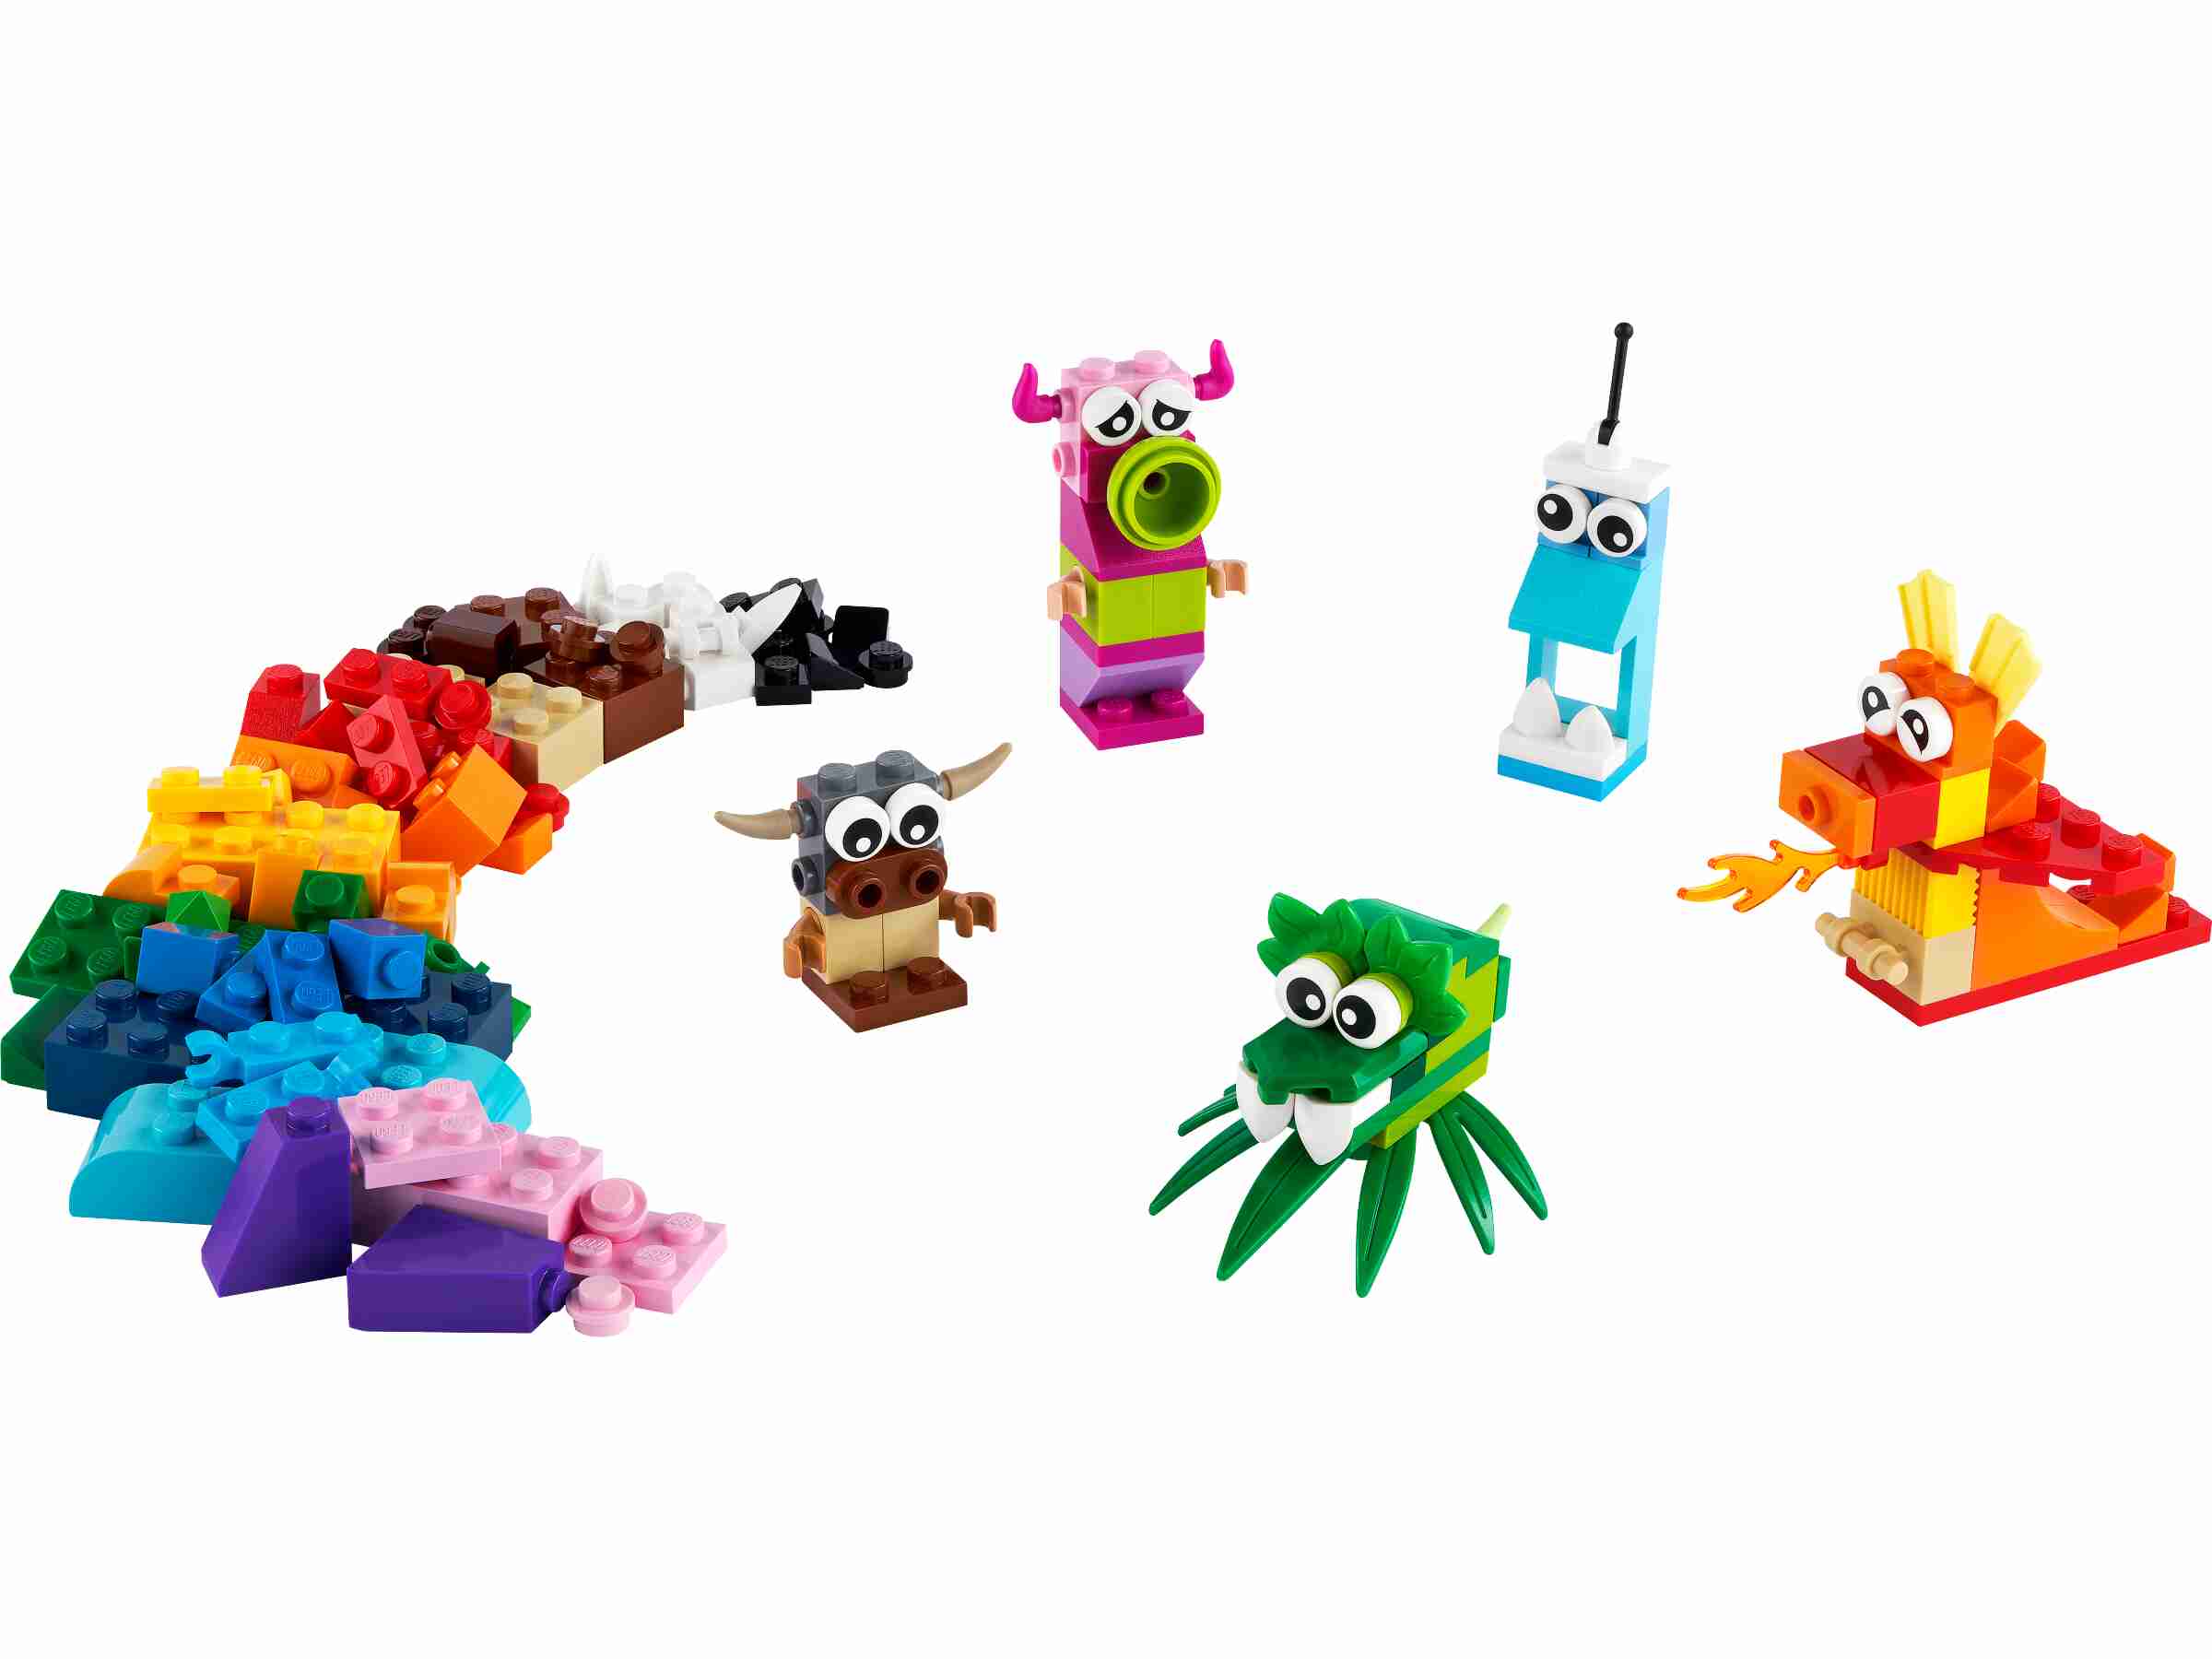 LEGO 11017 Classic Creative Monsters, Lobigo.co.uk: monster build Toys 5 toy ideas